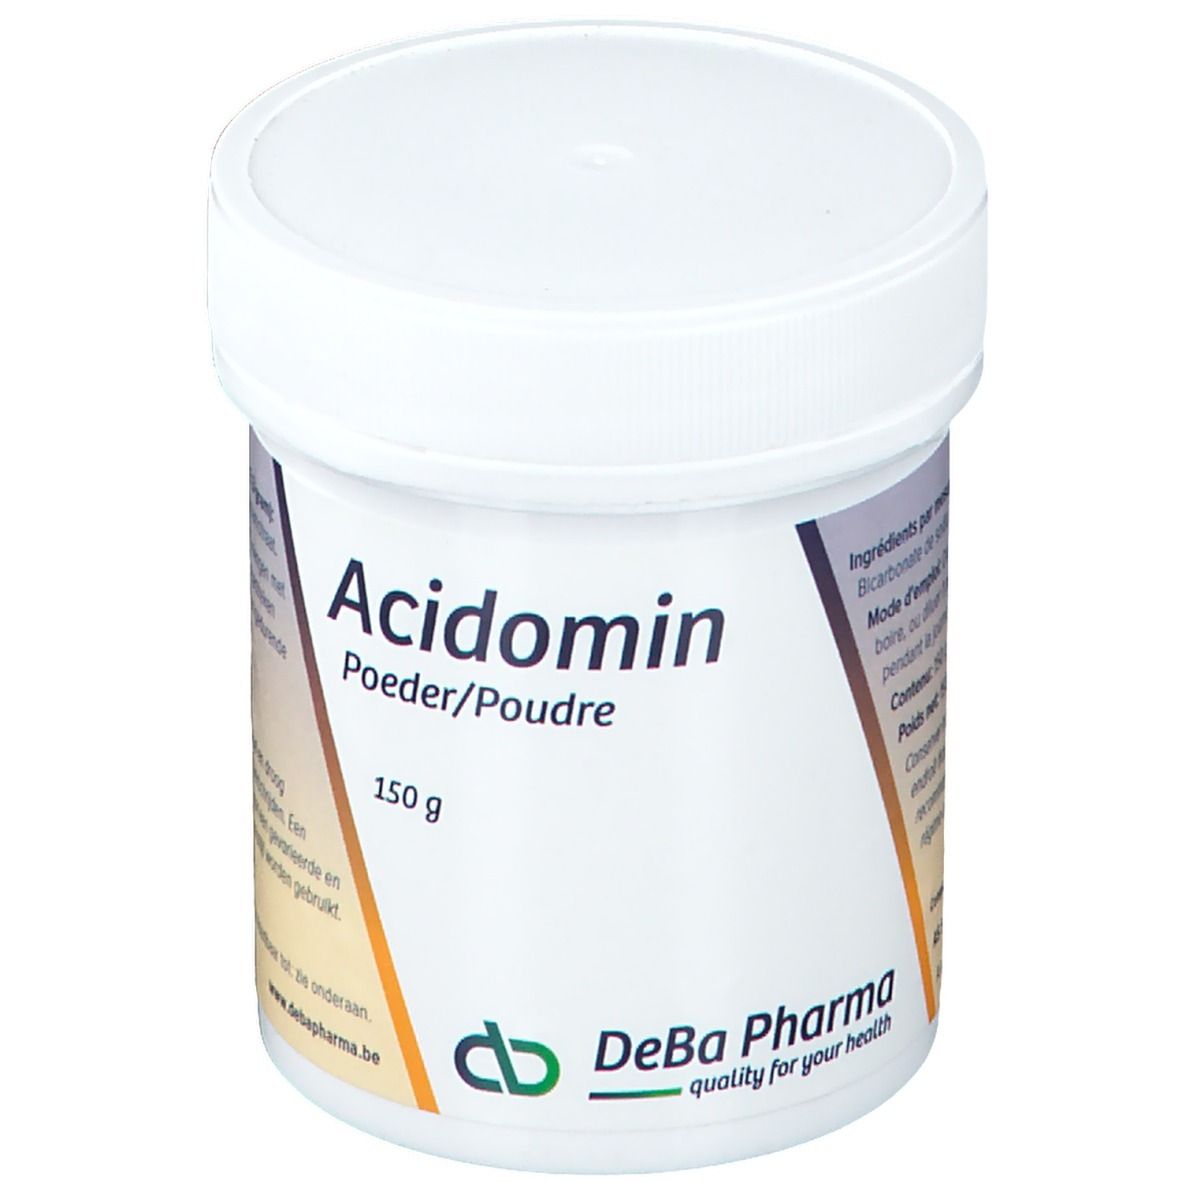 Acidomin